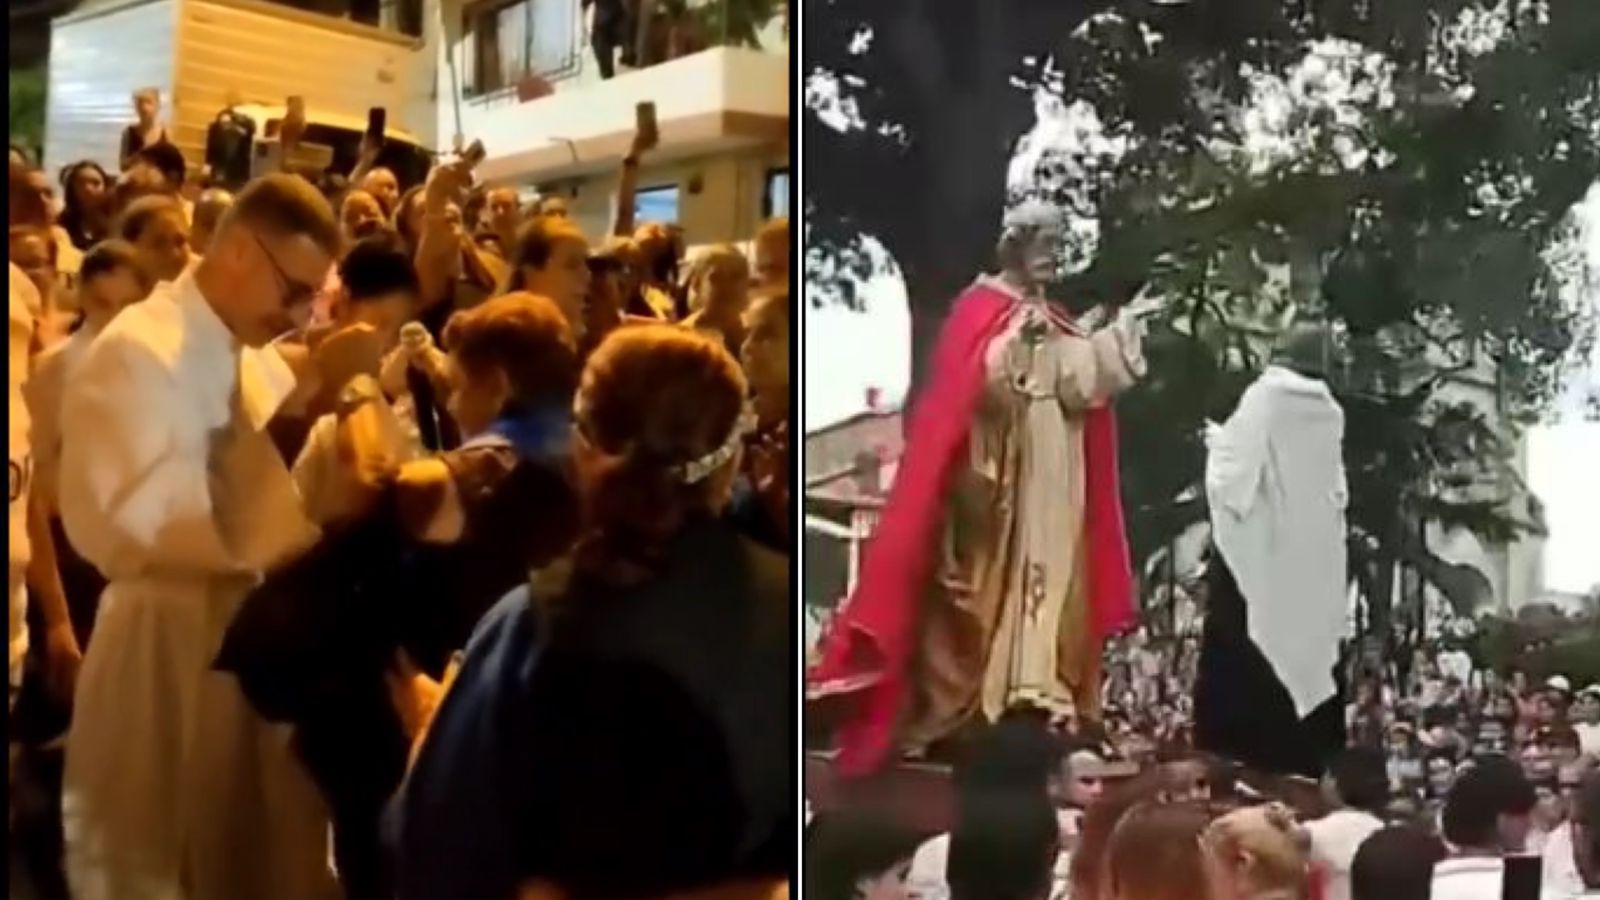 [Video] Jesús resucitó entre música parrandera en Manrique